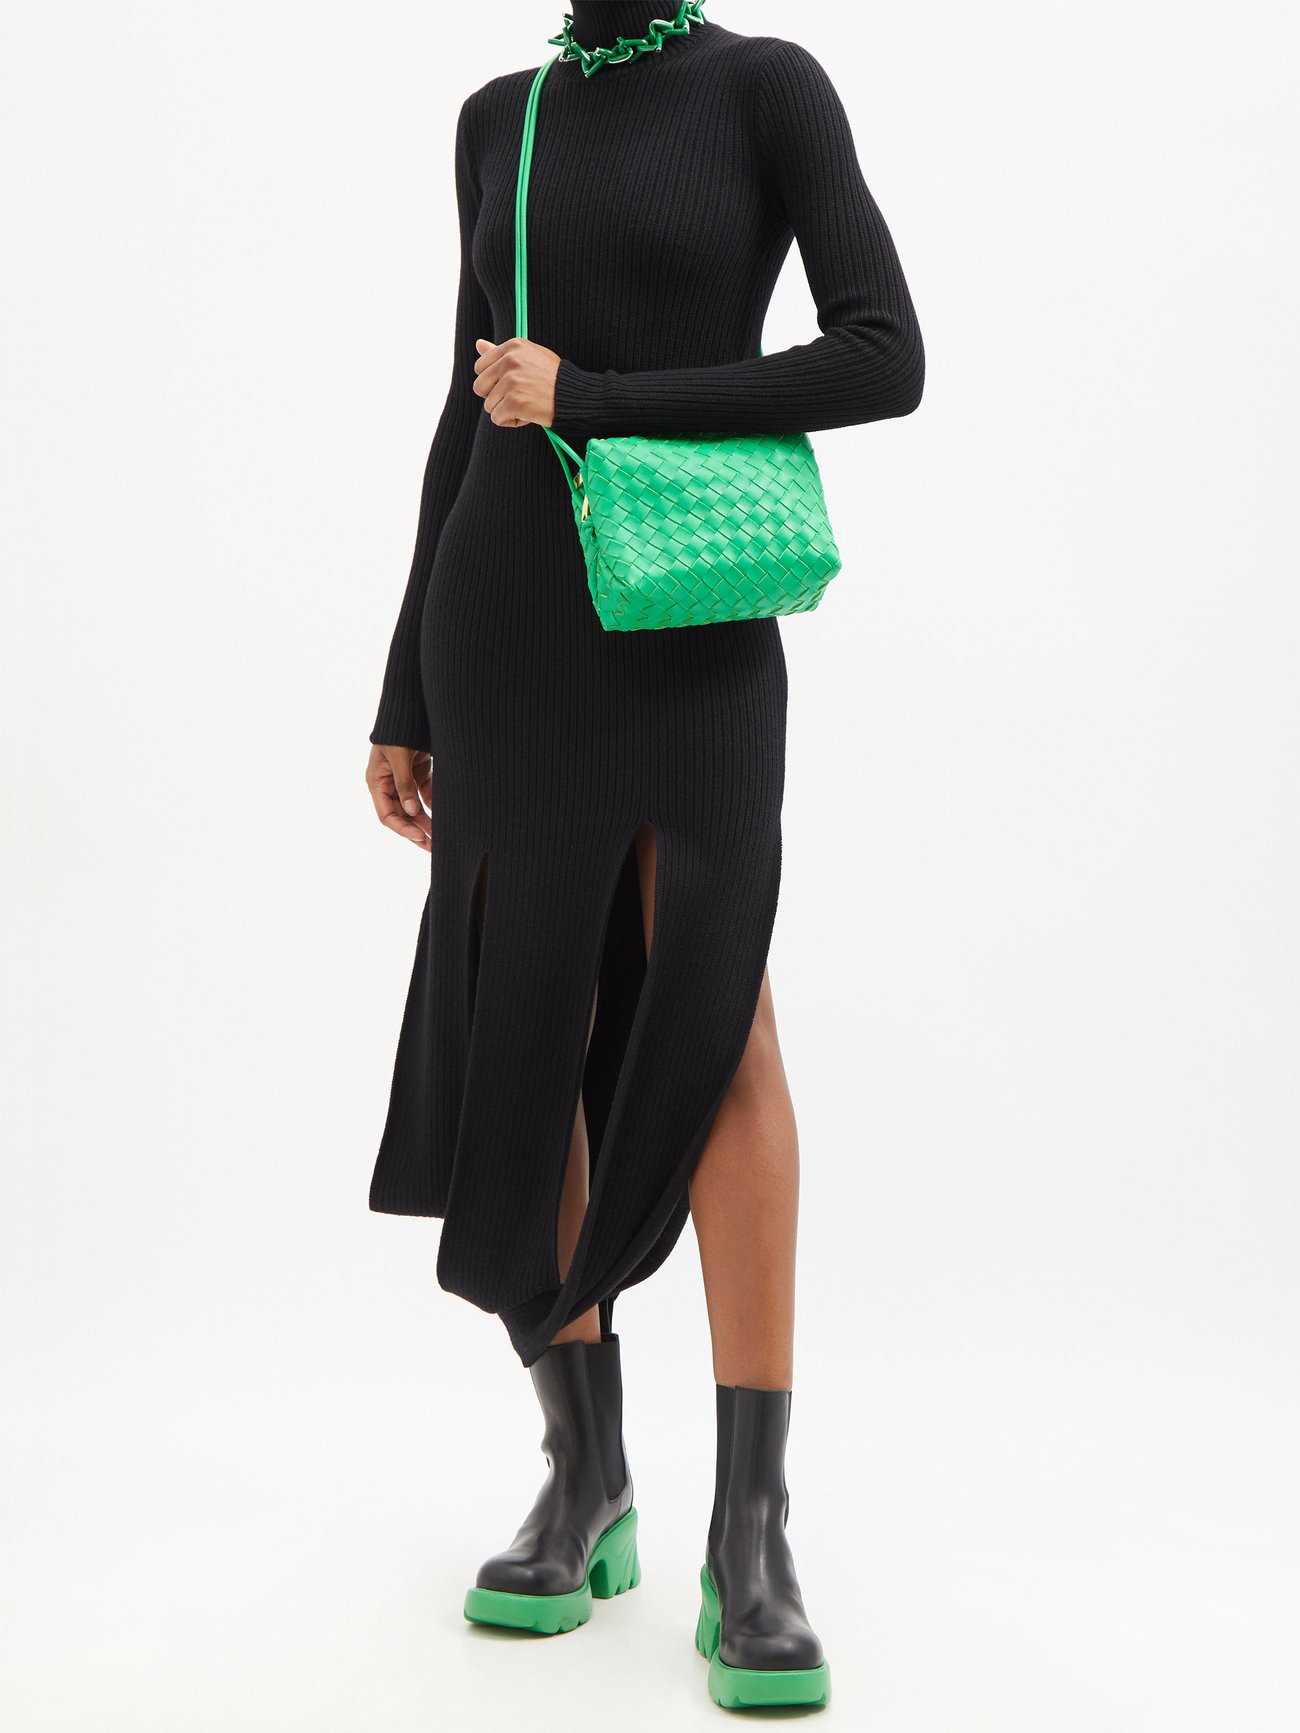 Bottega Veneta Loop Small Intrecciato Leather Shoulder Bag - Green - One Size